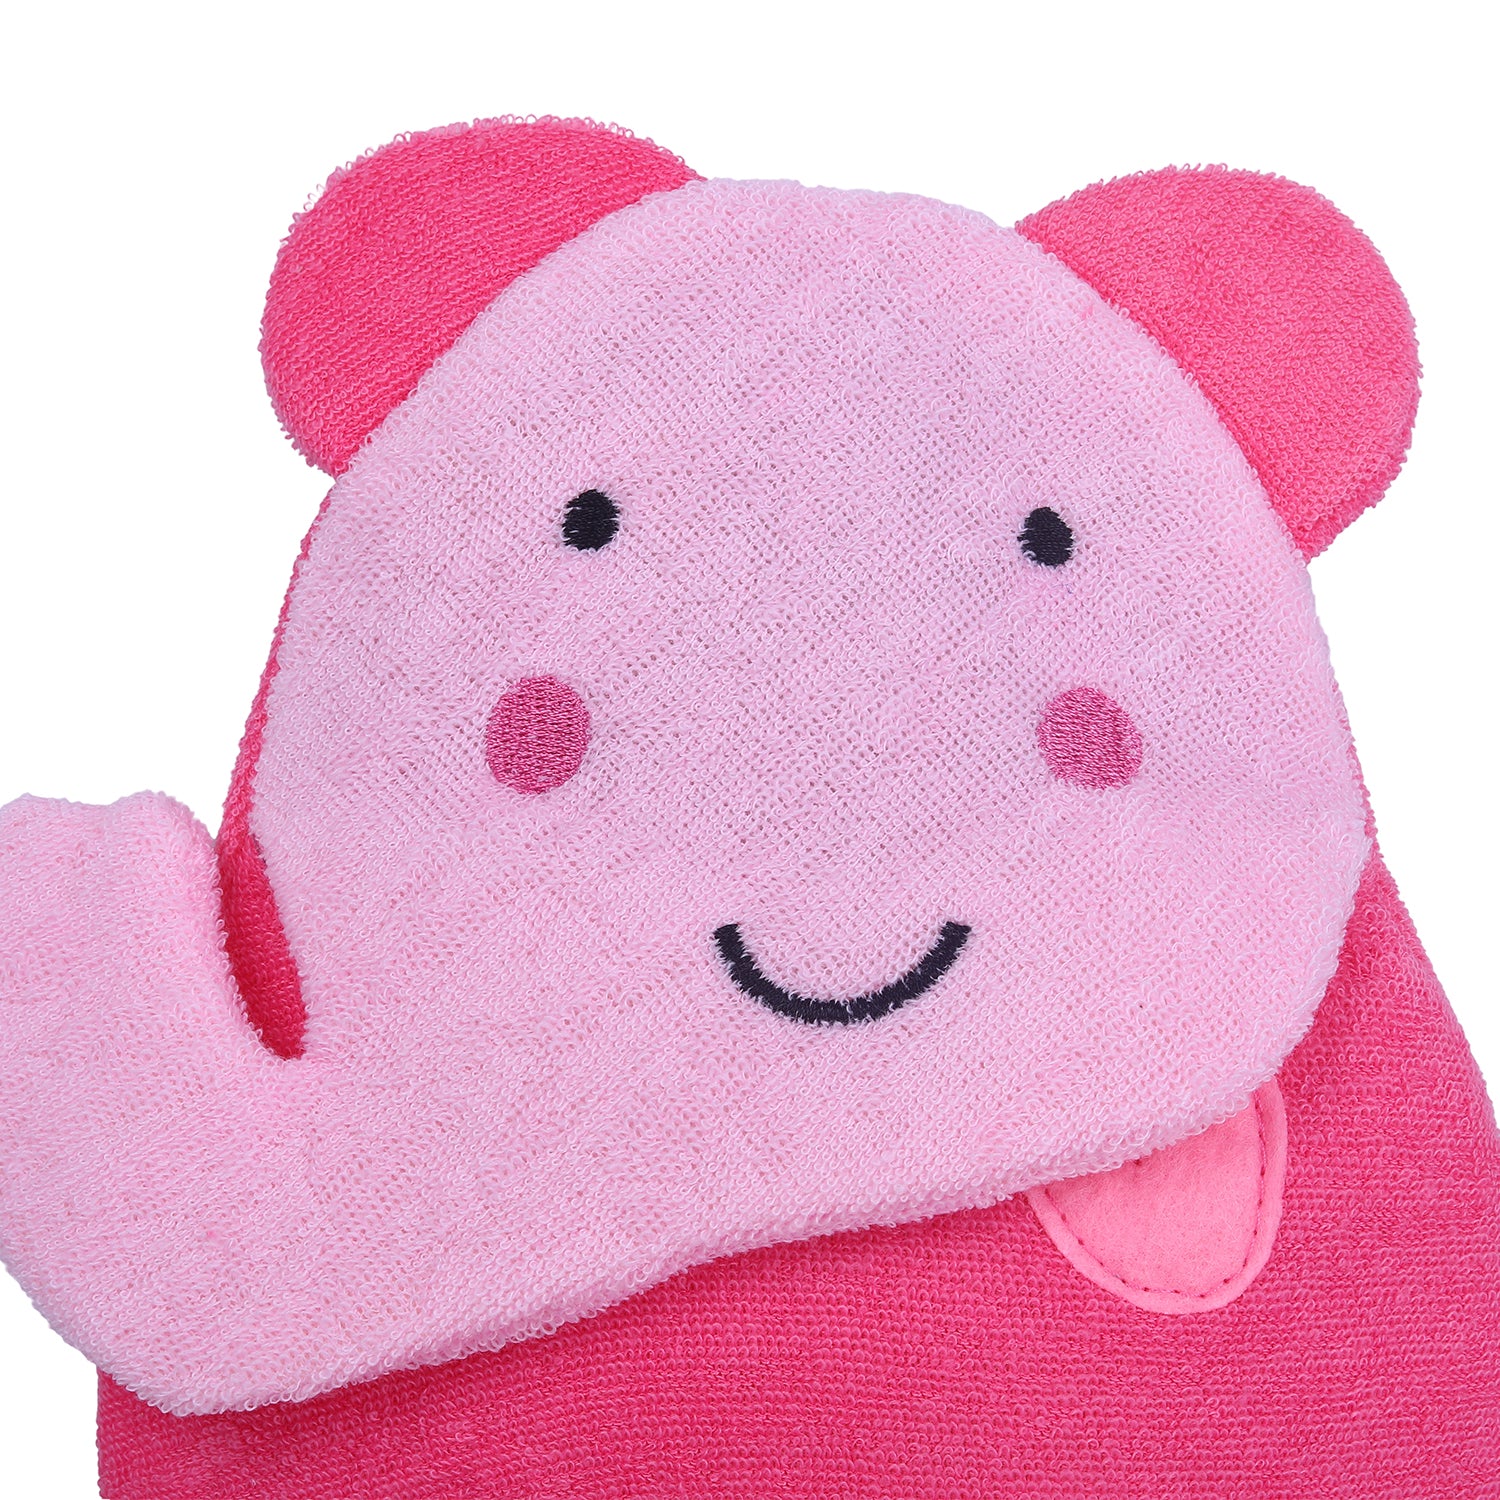 Baby Moo Blushing Elephant Bath Time Fun Hand Puppet Loofah Bath Glove - Pink - Baby Moo